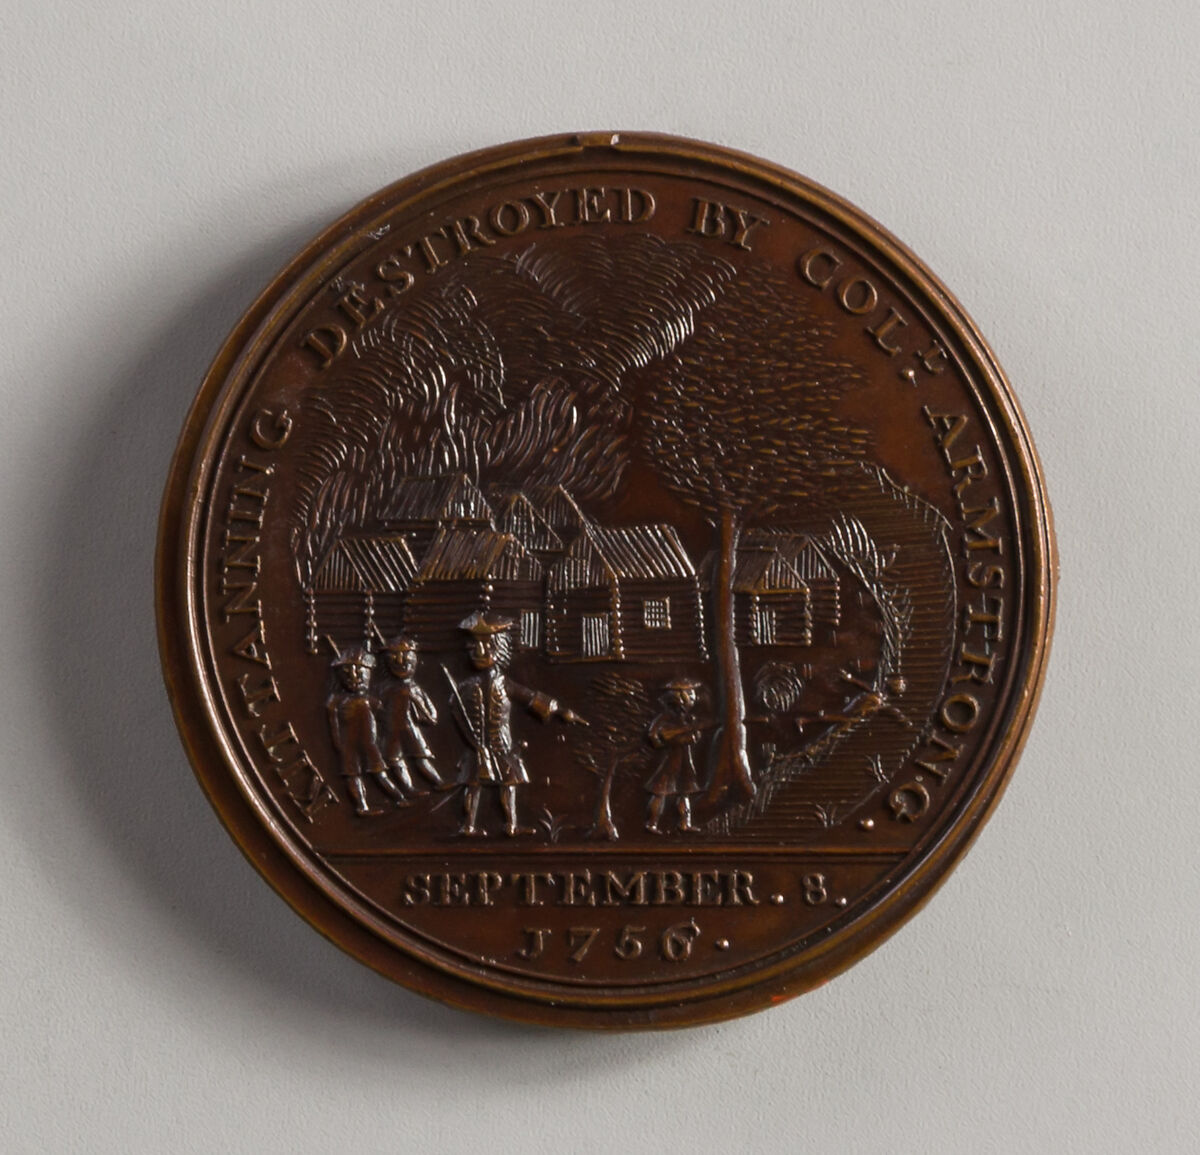 Medal of the Indian Village of Kittanning, Pennsylvania, Bronze 